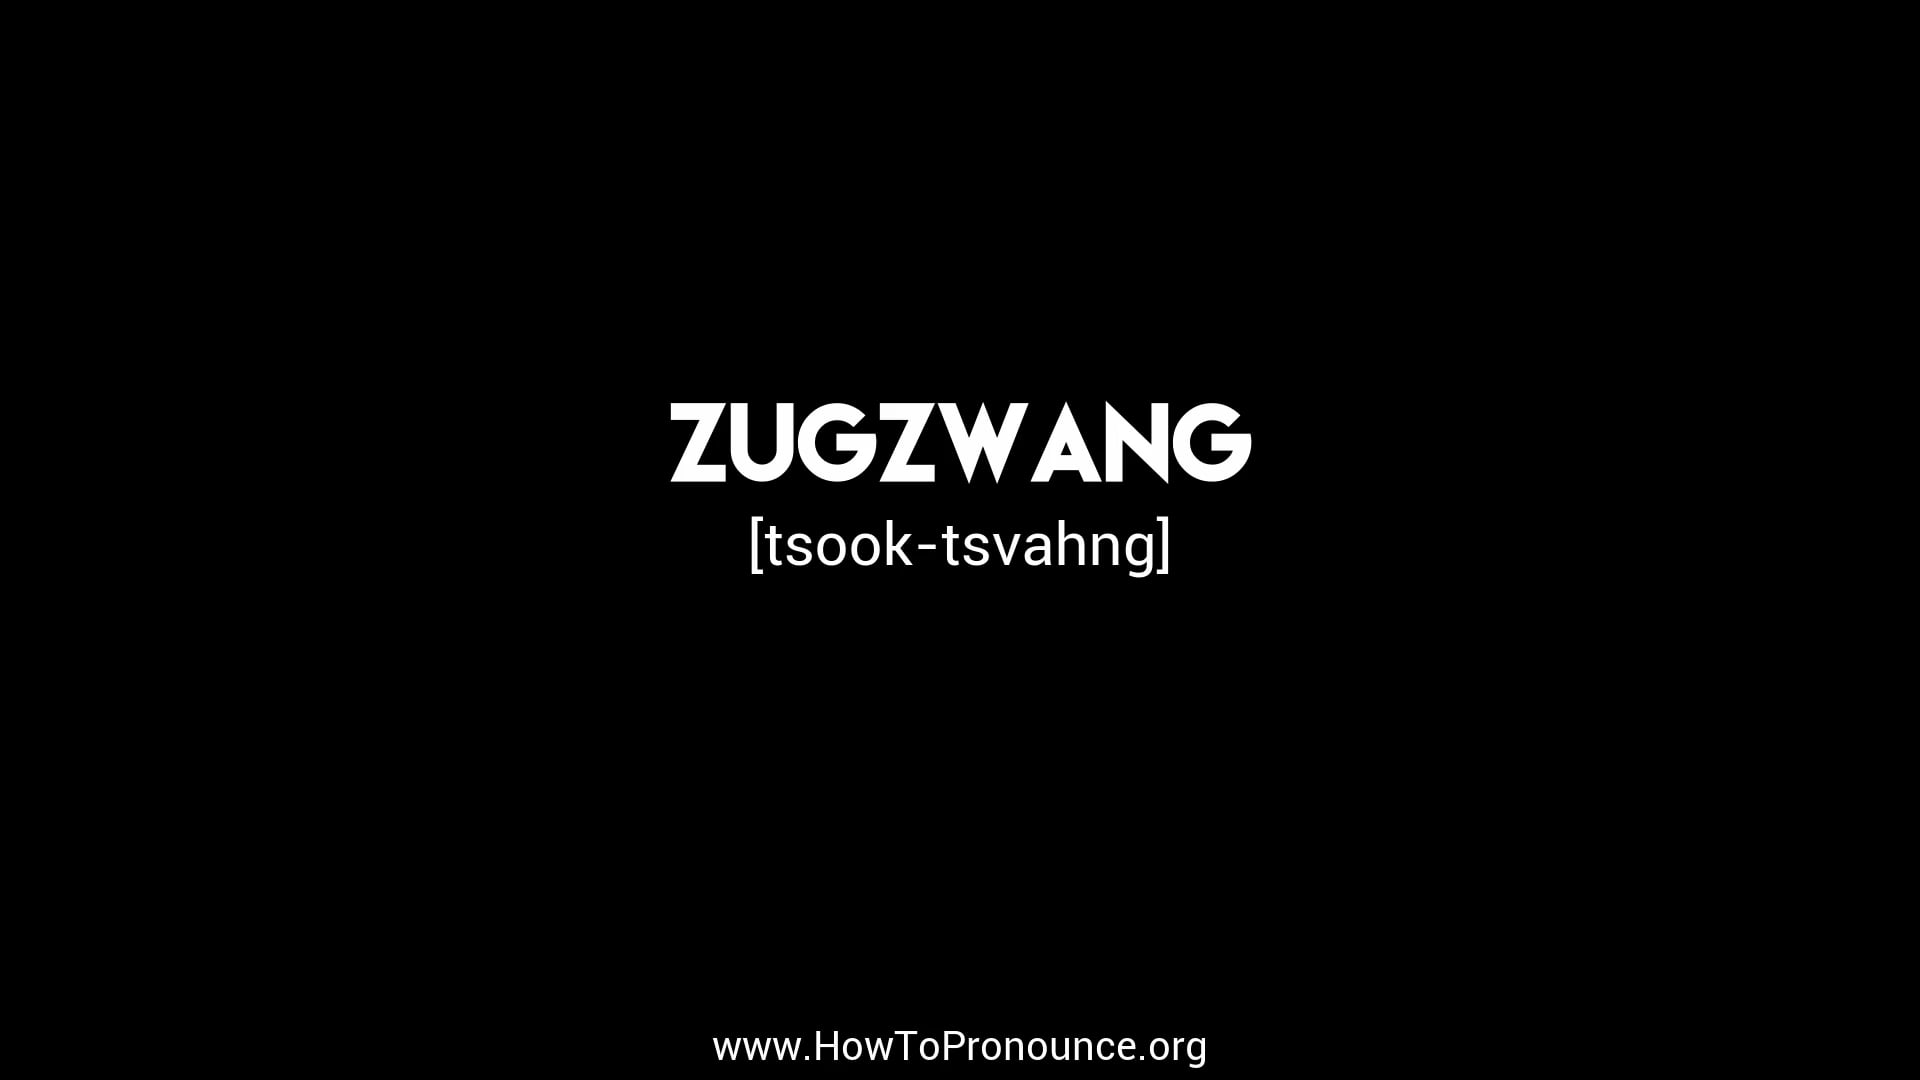 How to Pronounce zugzwang on Vimeo